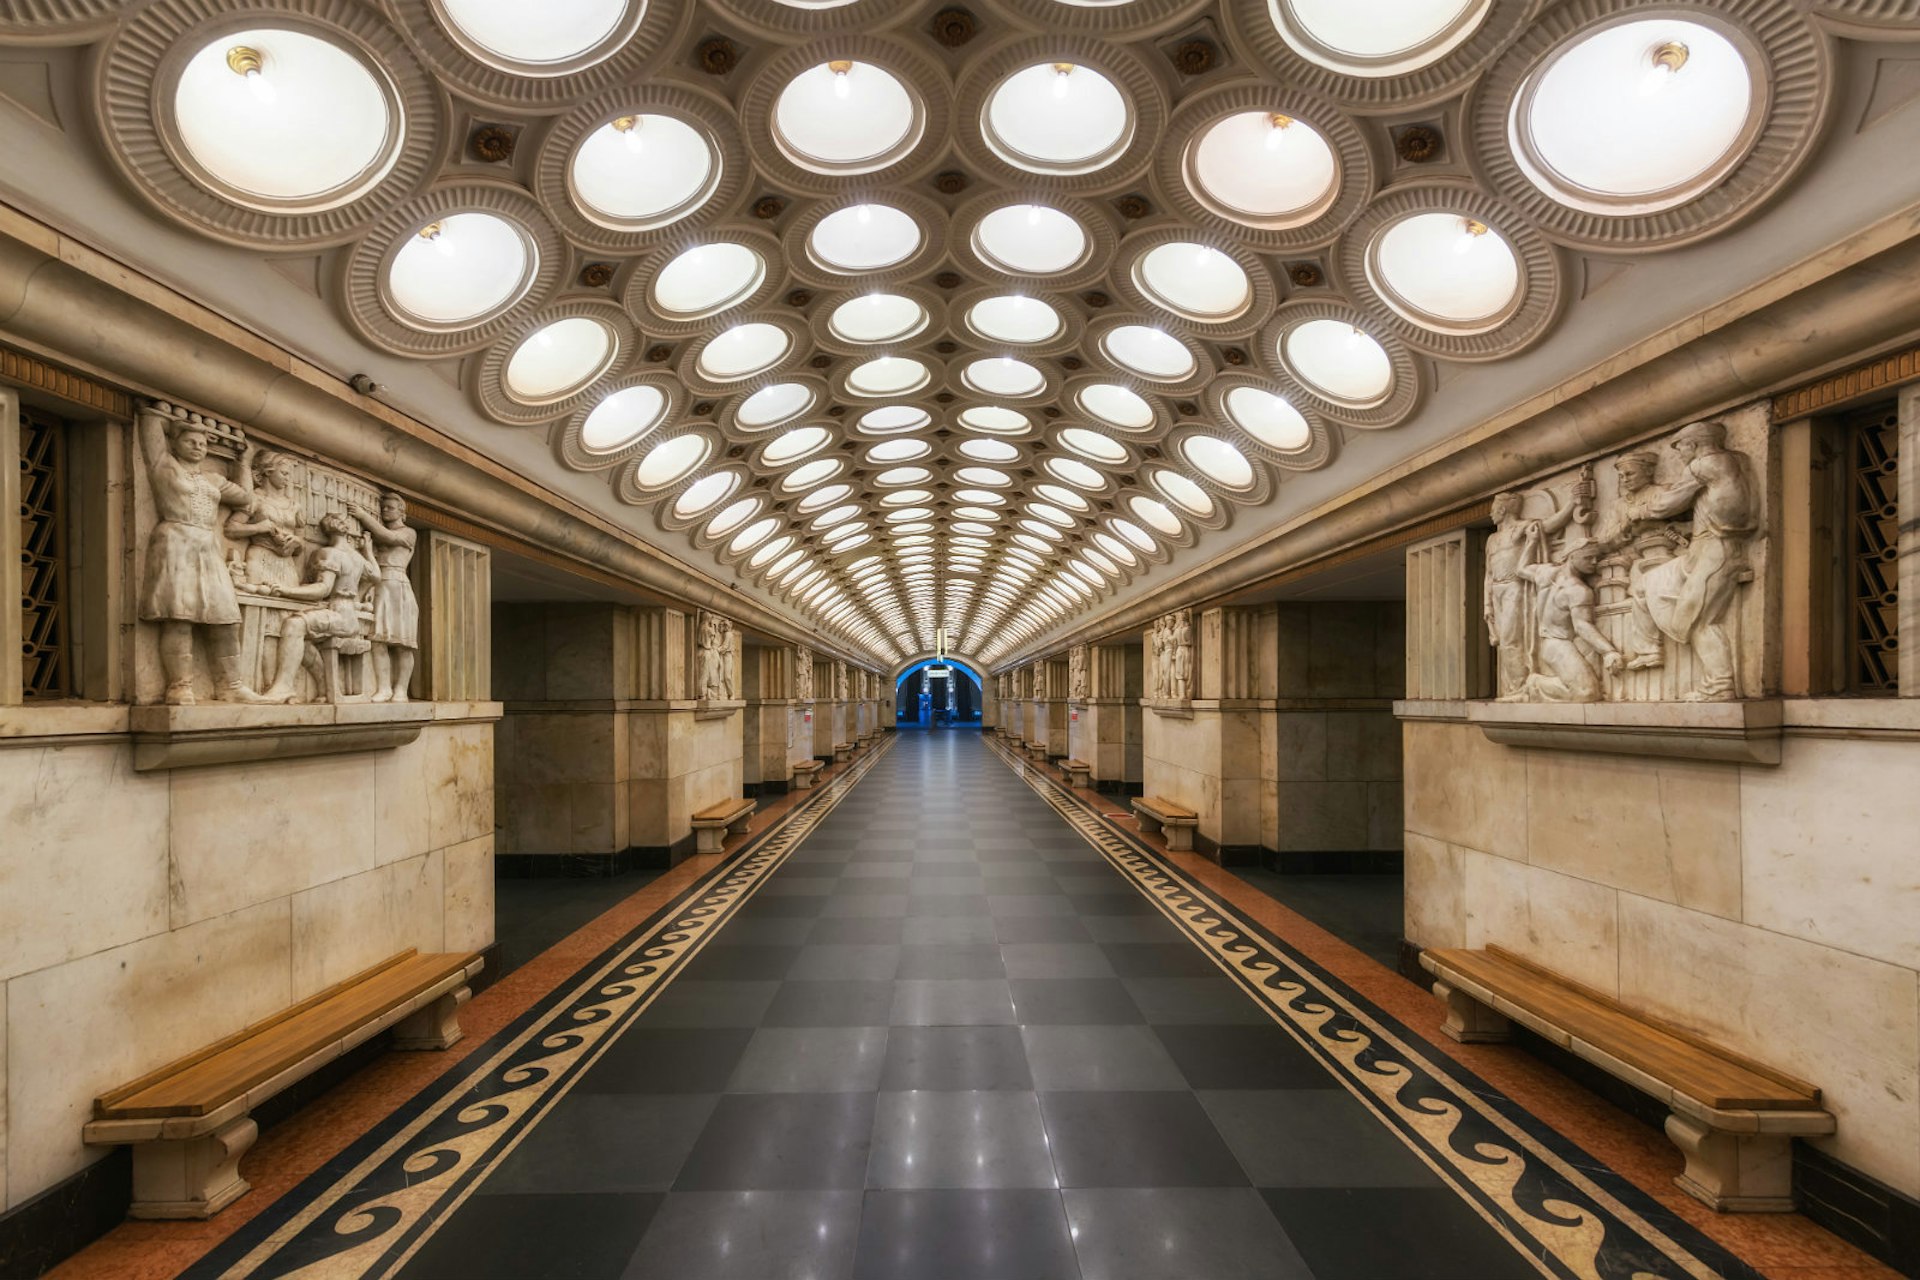 Urban transport in Moscow: The interior of Elektrozavodskaya metro station is spectacular